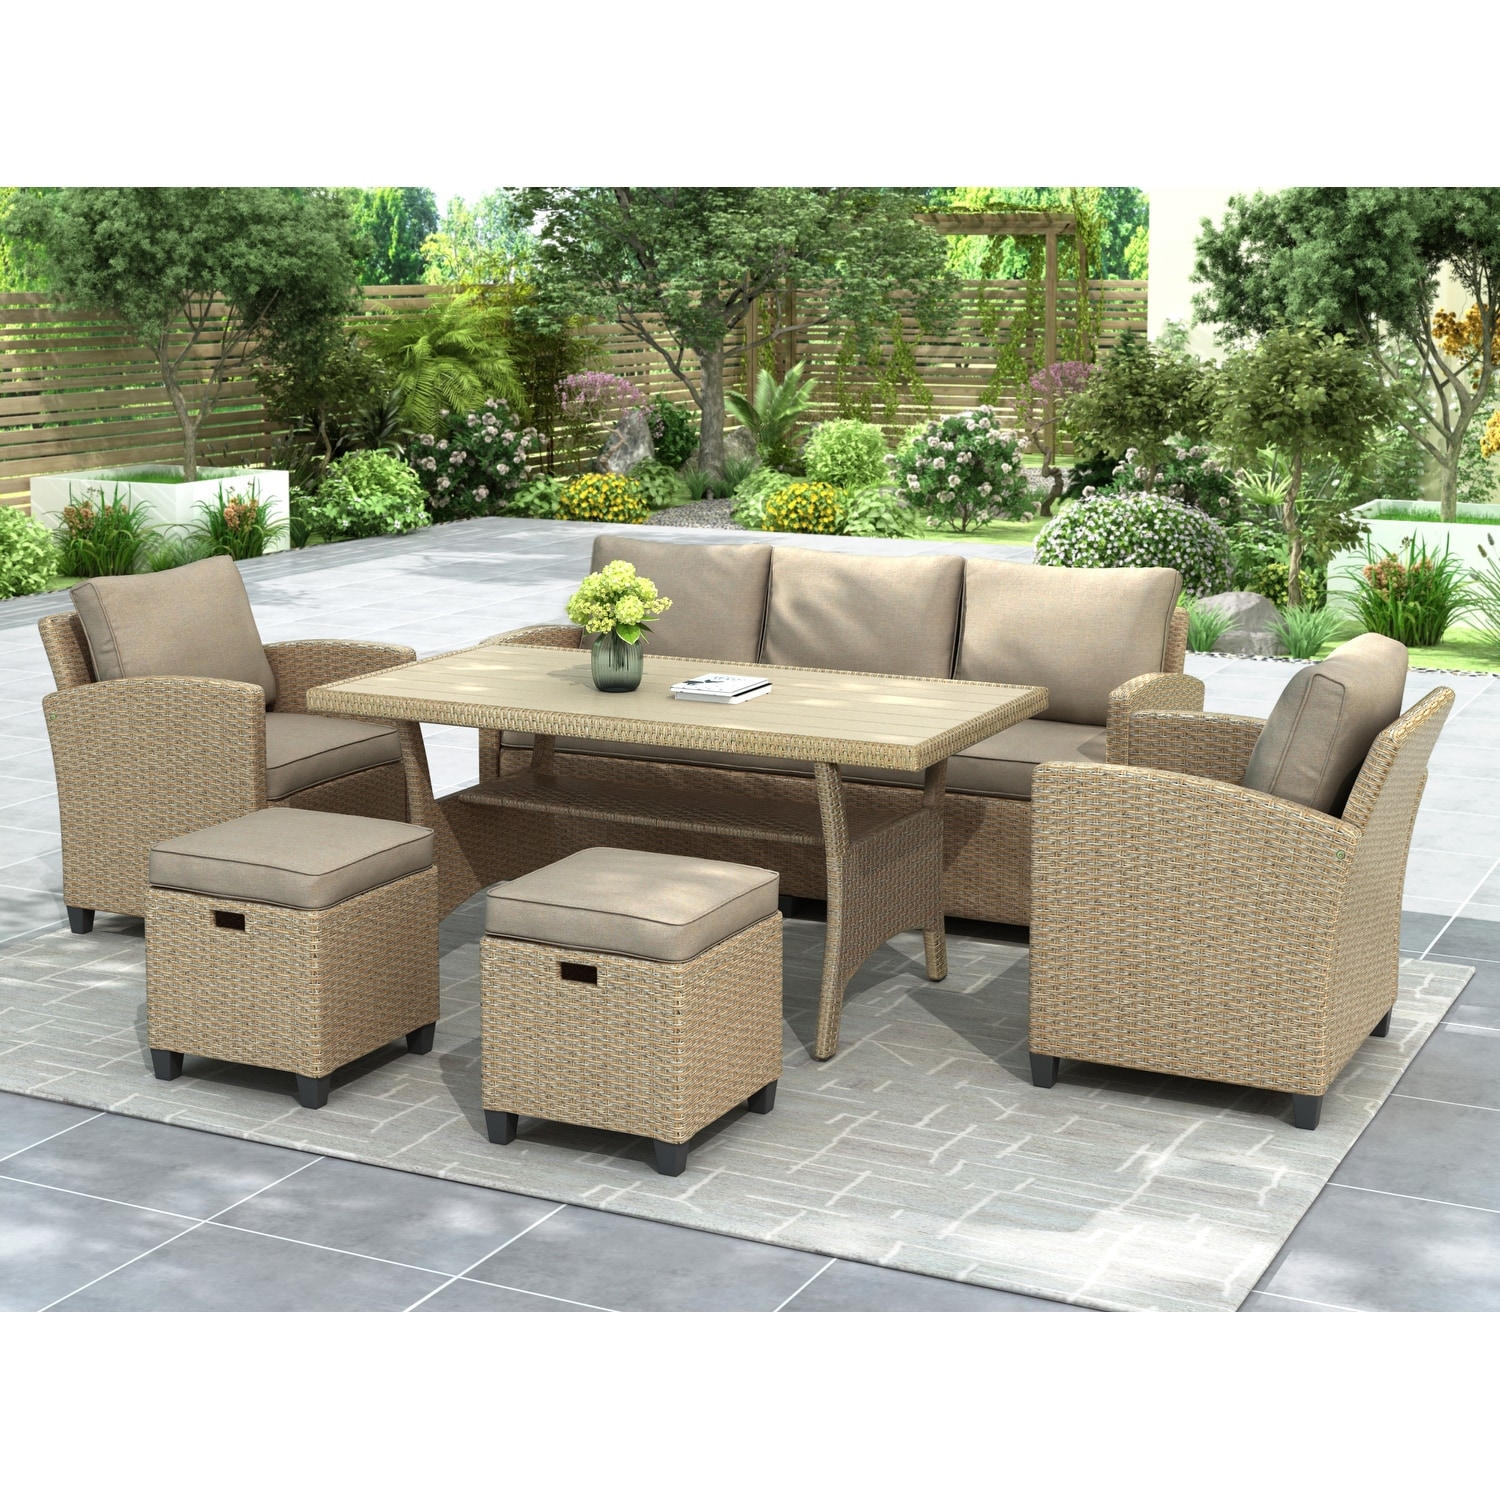 6 Piece Outdoor Rattan Wicker Set Patio Garden Backyard Sofa Adn Chair Set  Stools